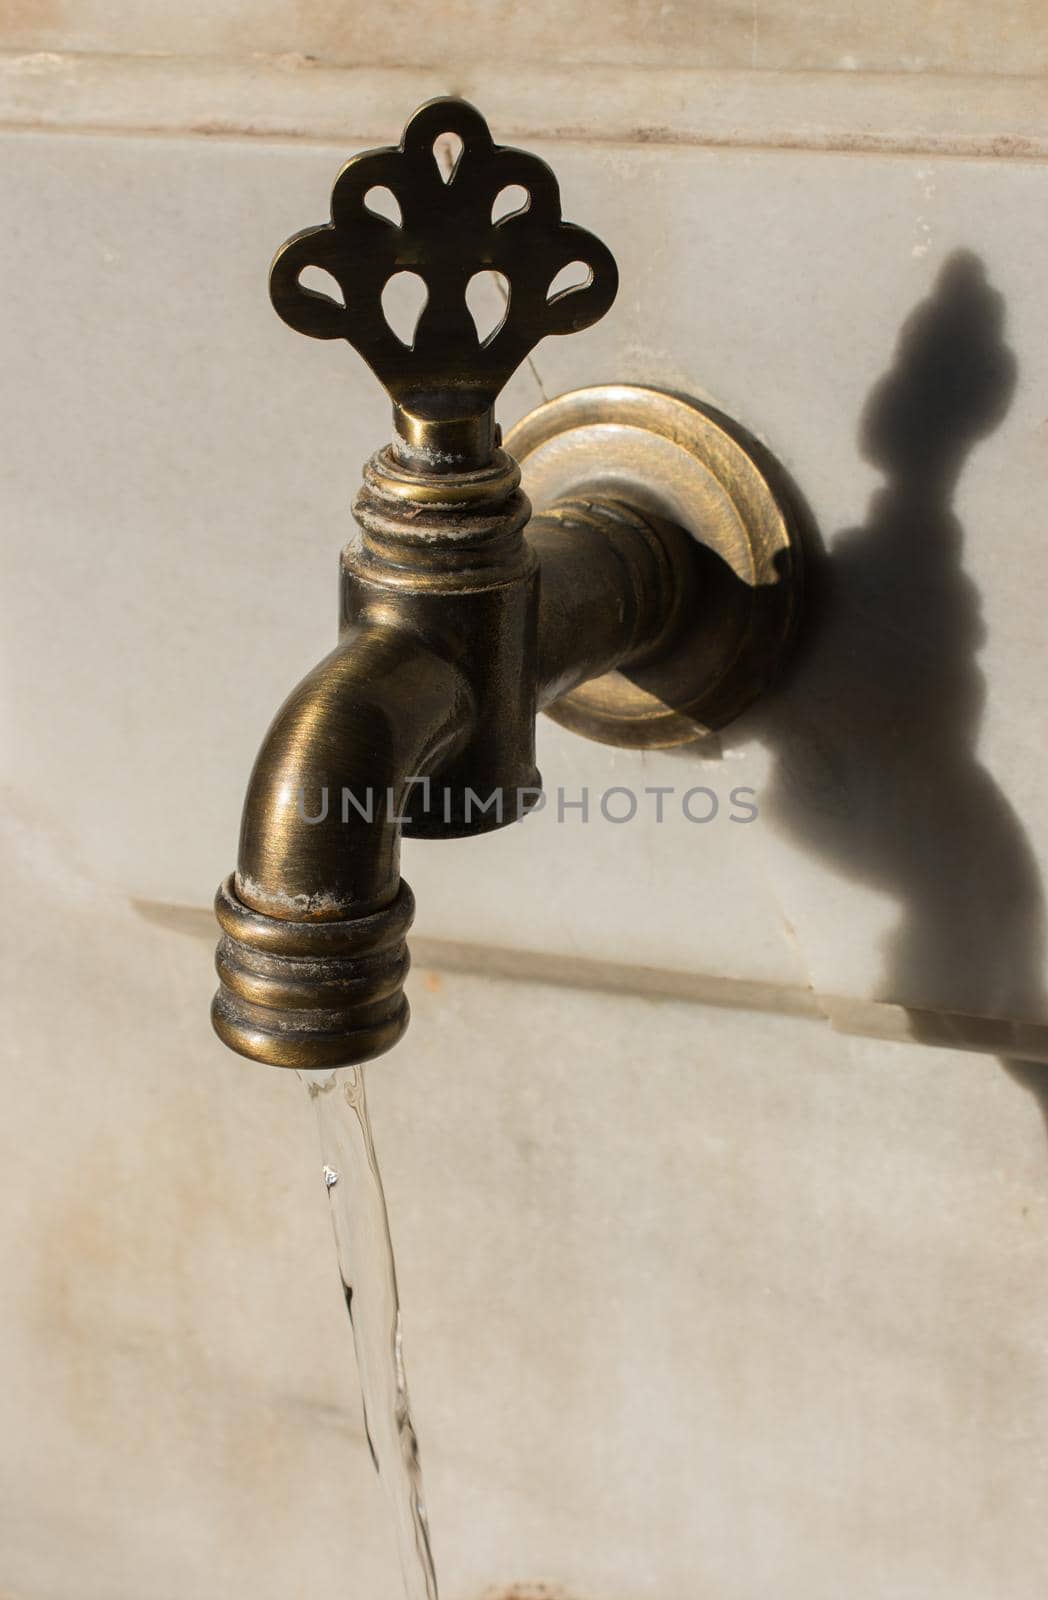 Turkish Ottoman style water taps by berkay